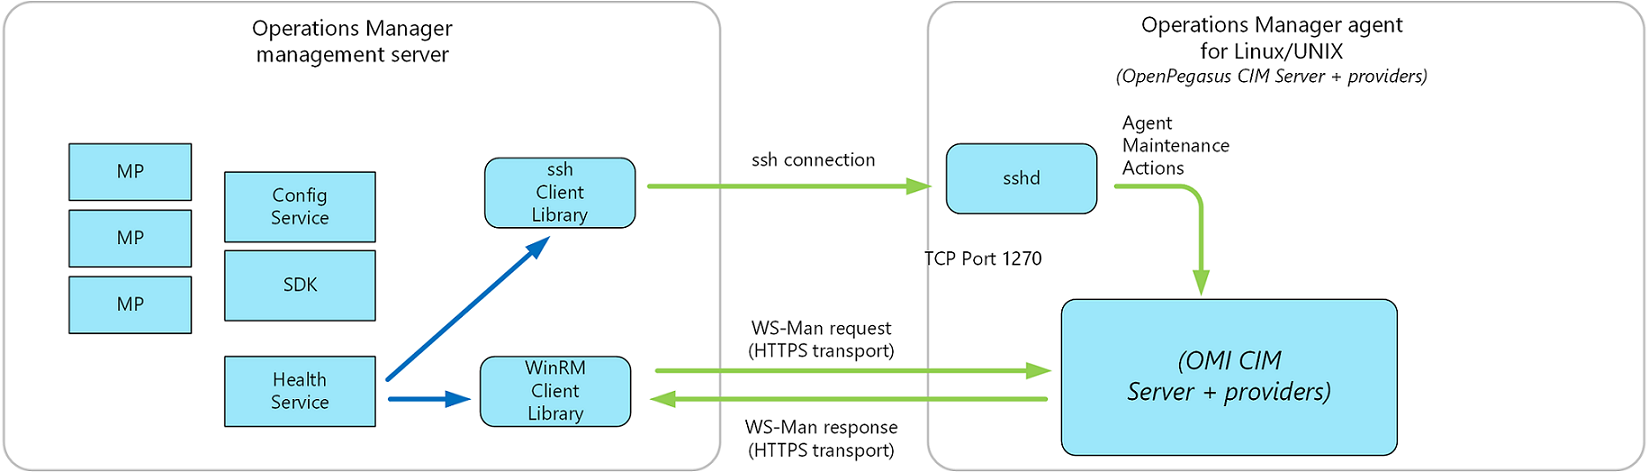 Diagrama de la arquitectura de software actualizada del agente UNIX/Linux de Operations Manager.